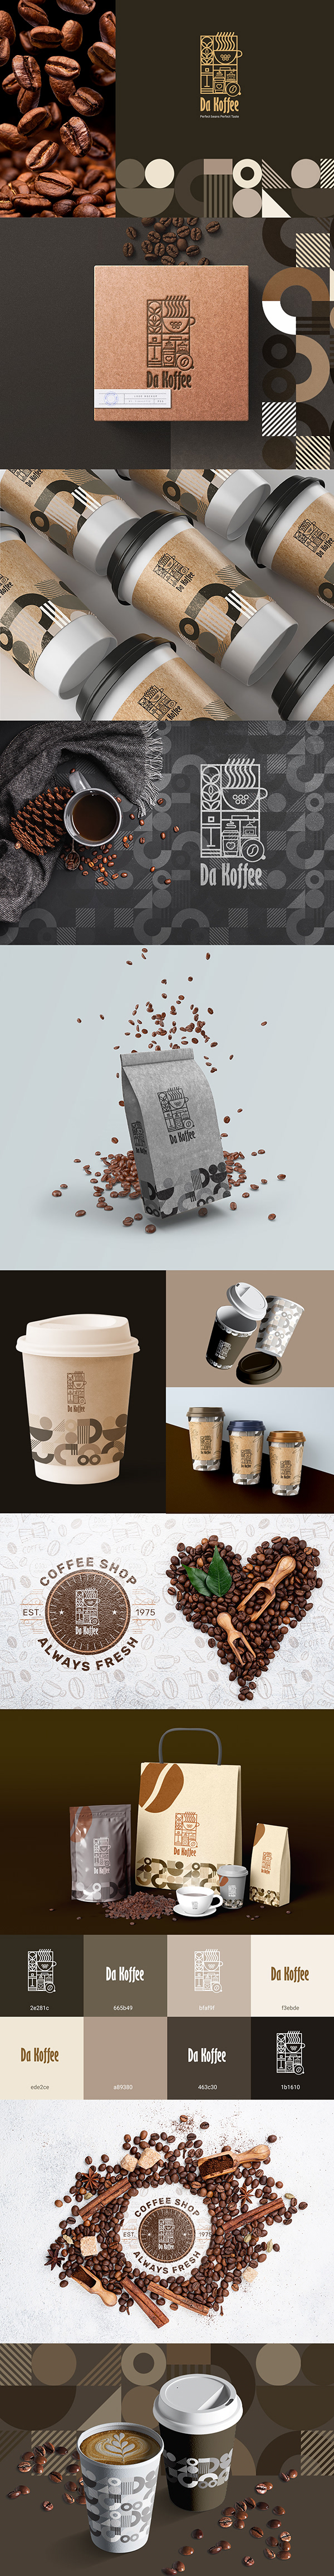 DA KOFFEE - Conceptual Coffee Business Branding